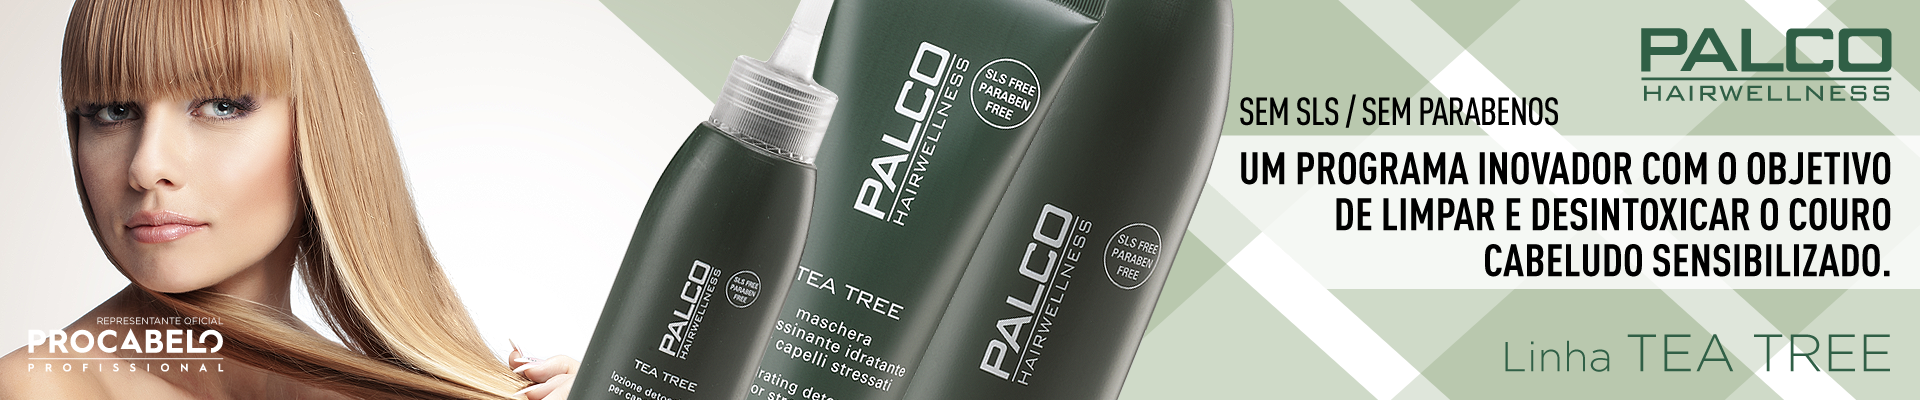 Hairwellness TEA TREE Palco